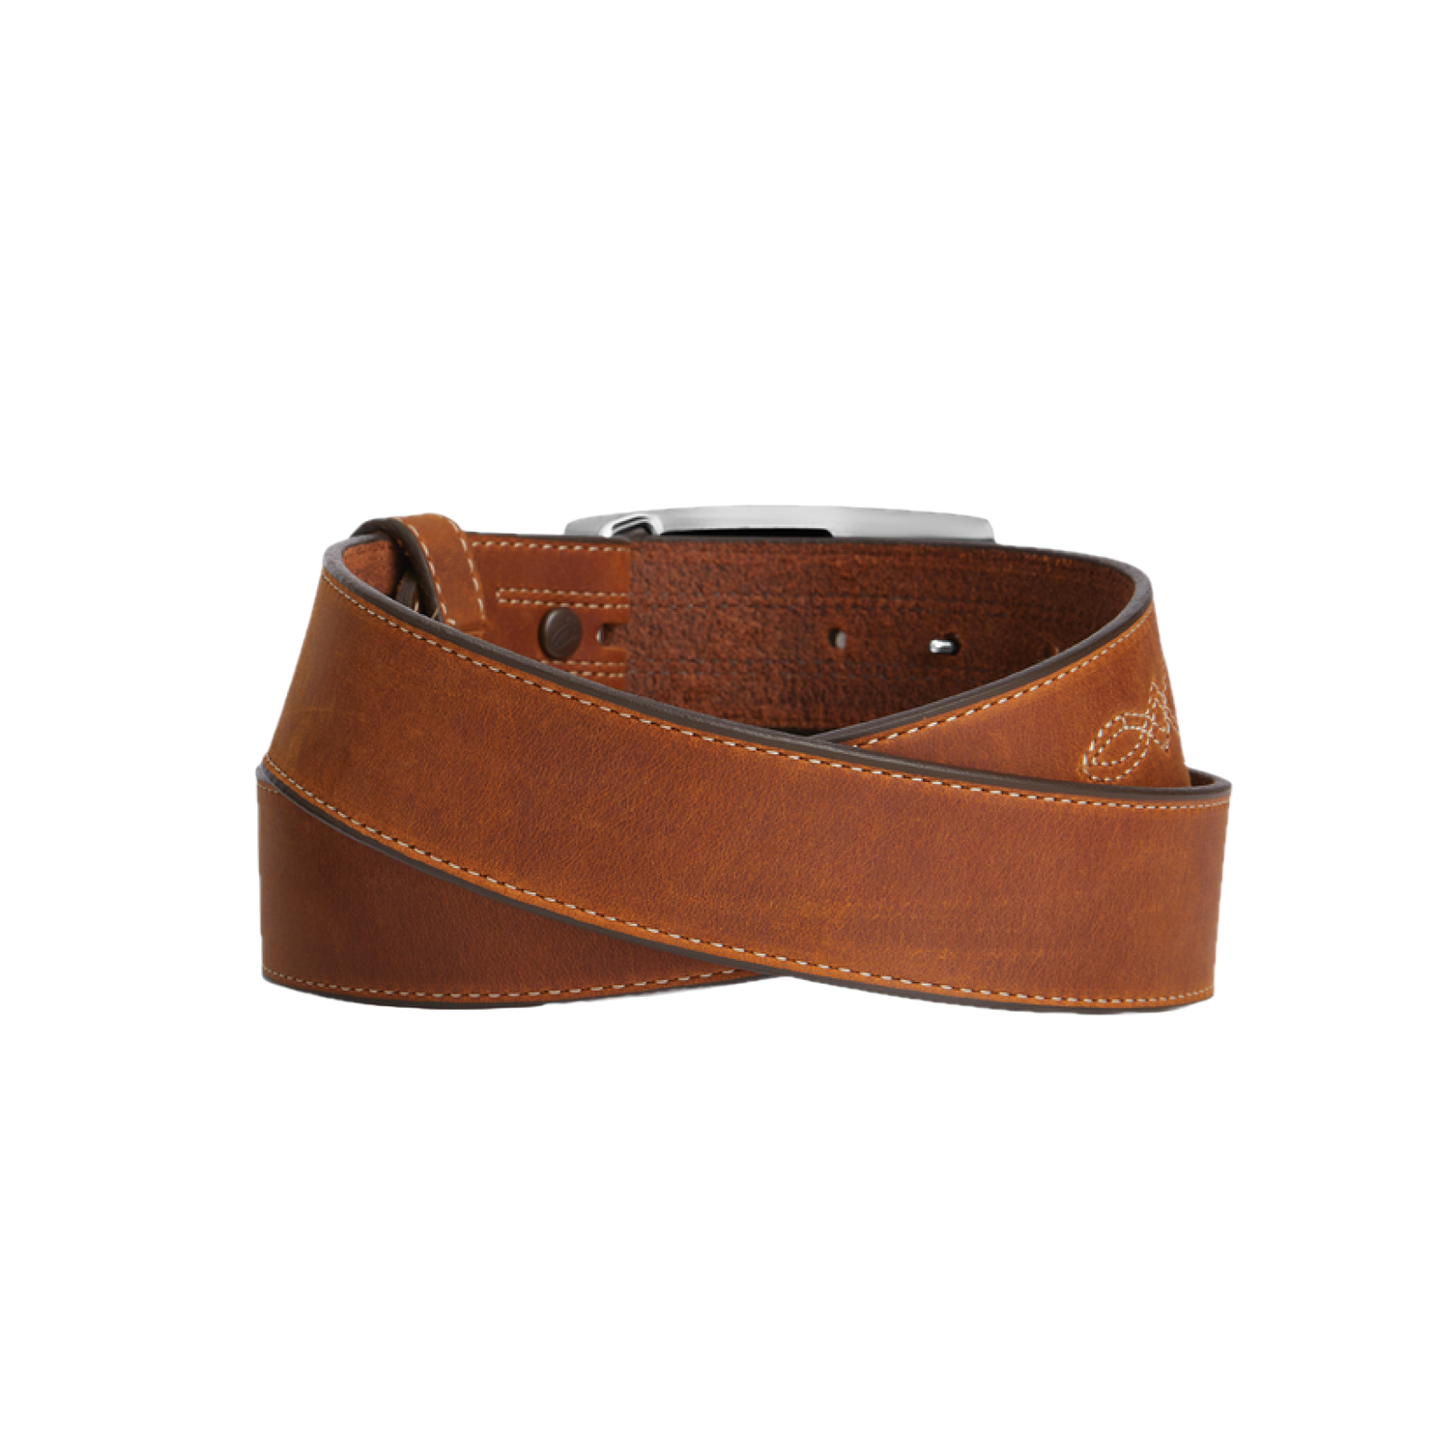 Justin® Men's Craftman Plain Brown Leather Belt C14059